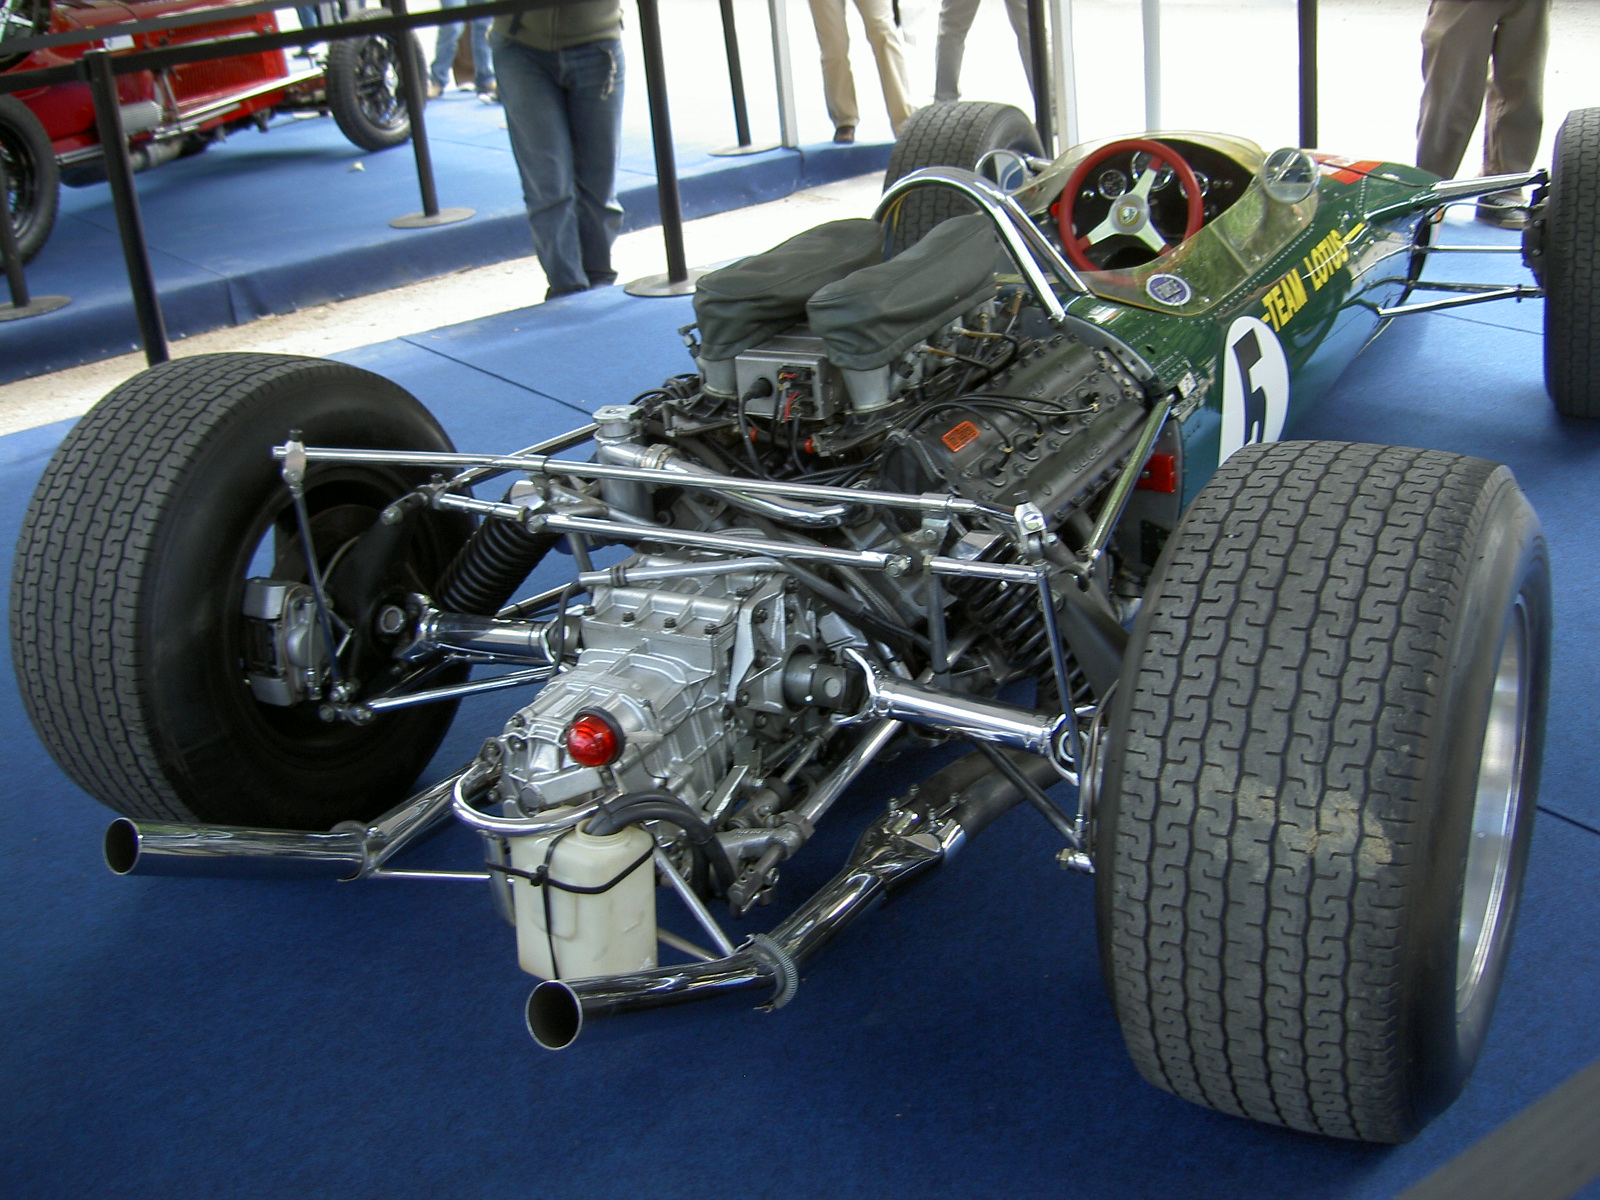 Formula 1 Gearbox Designs Gear Talk With Chuck Gear Technology Magazine